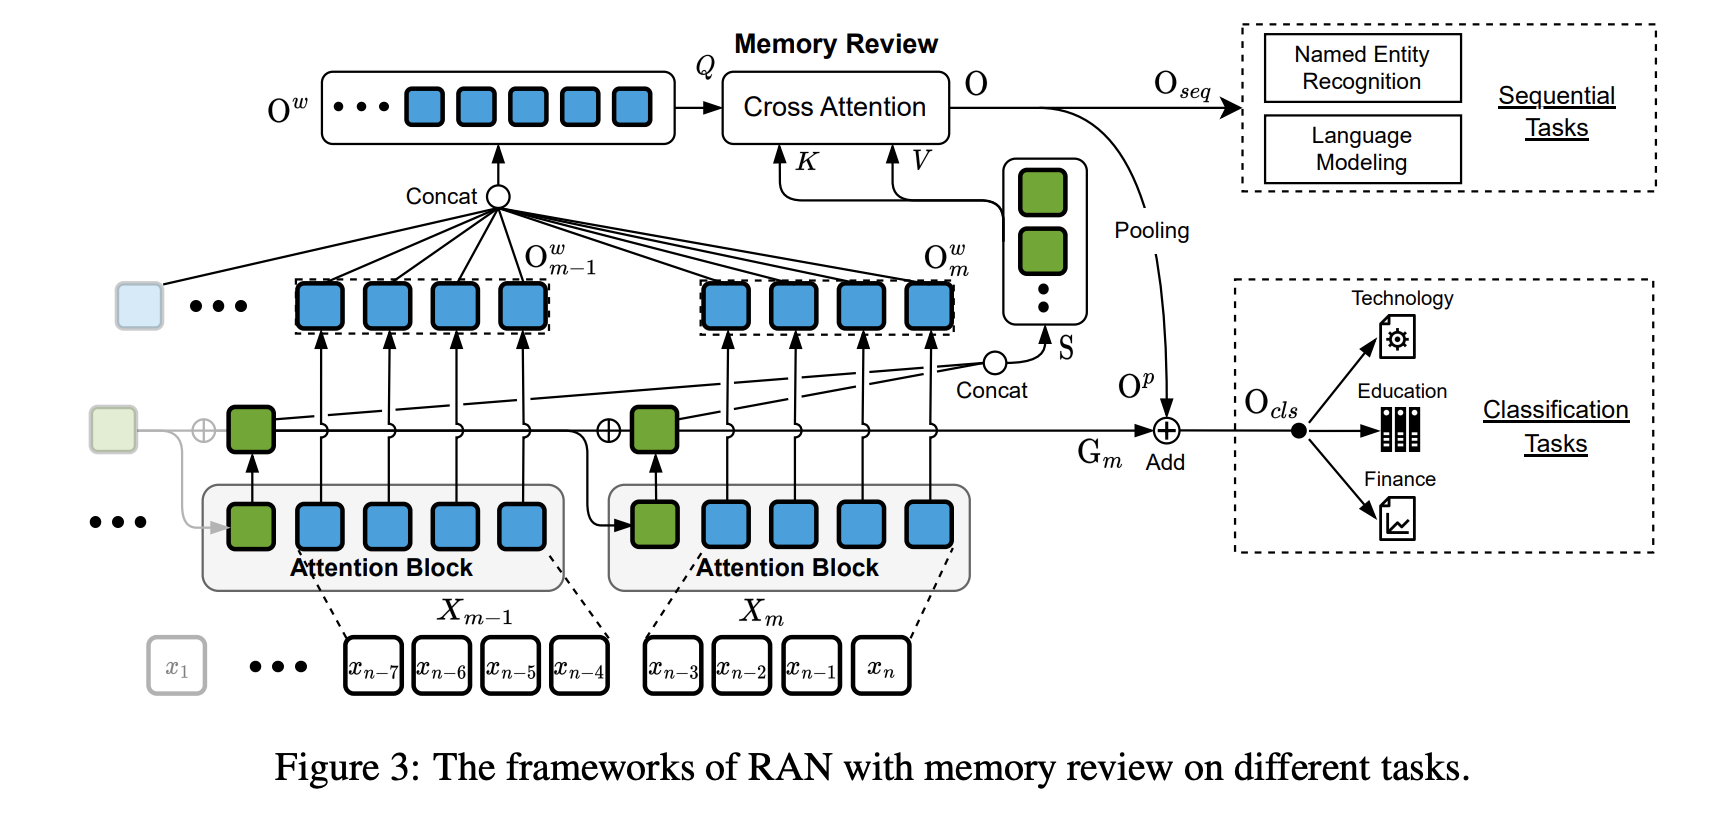 The framework of RAN